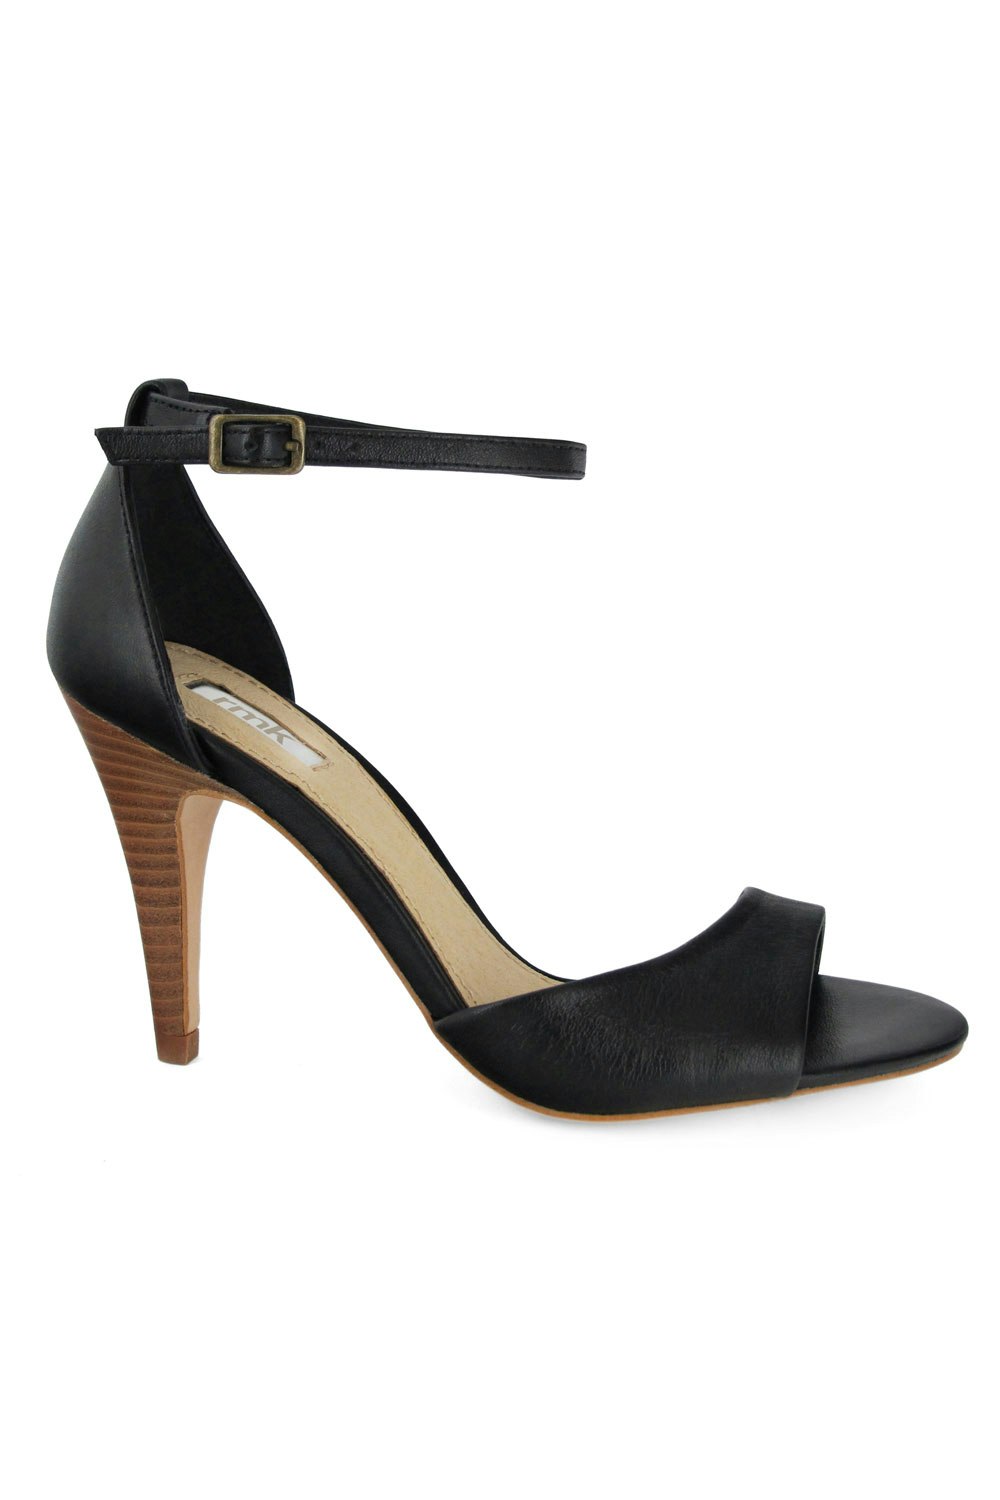 RMK shoes online Finley Heel - Womens Heels - Birdsnest Online Clothing ...